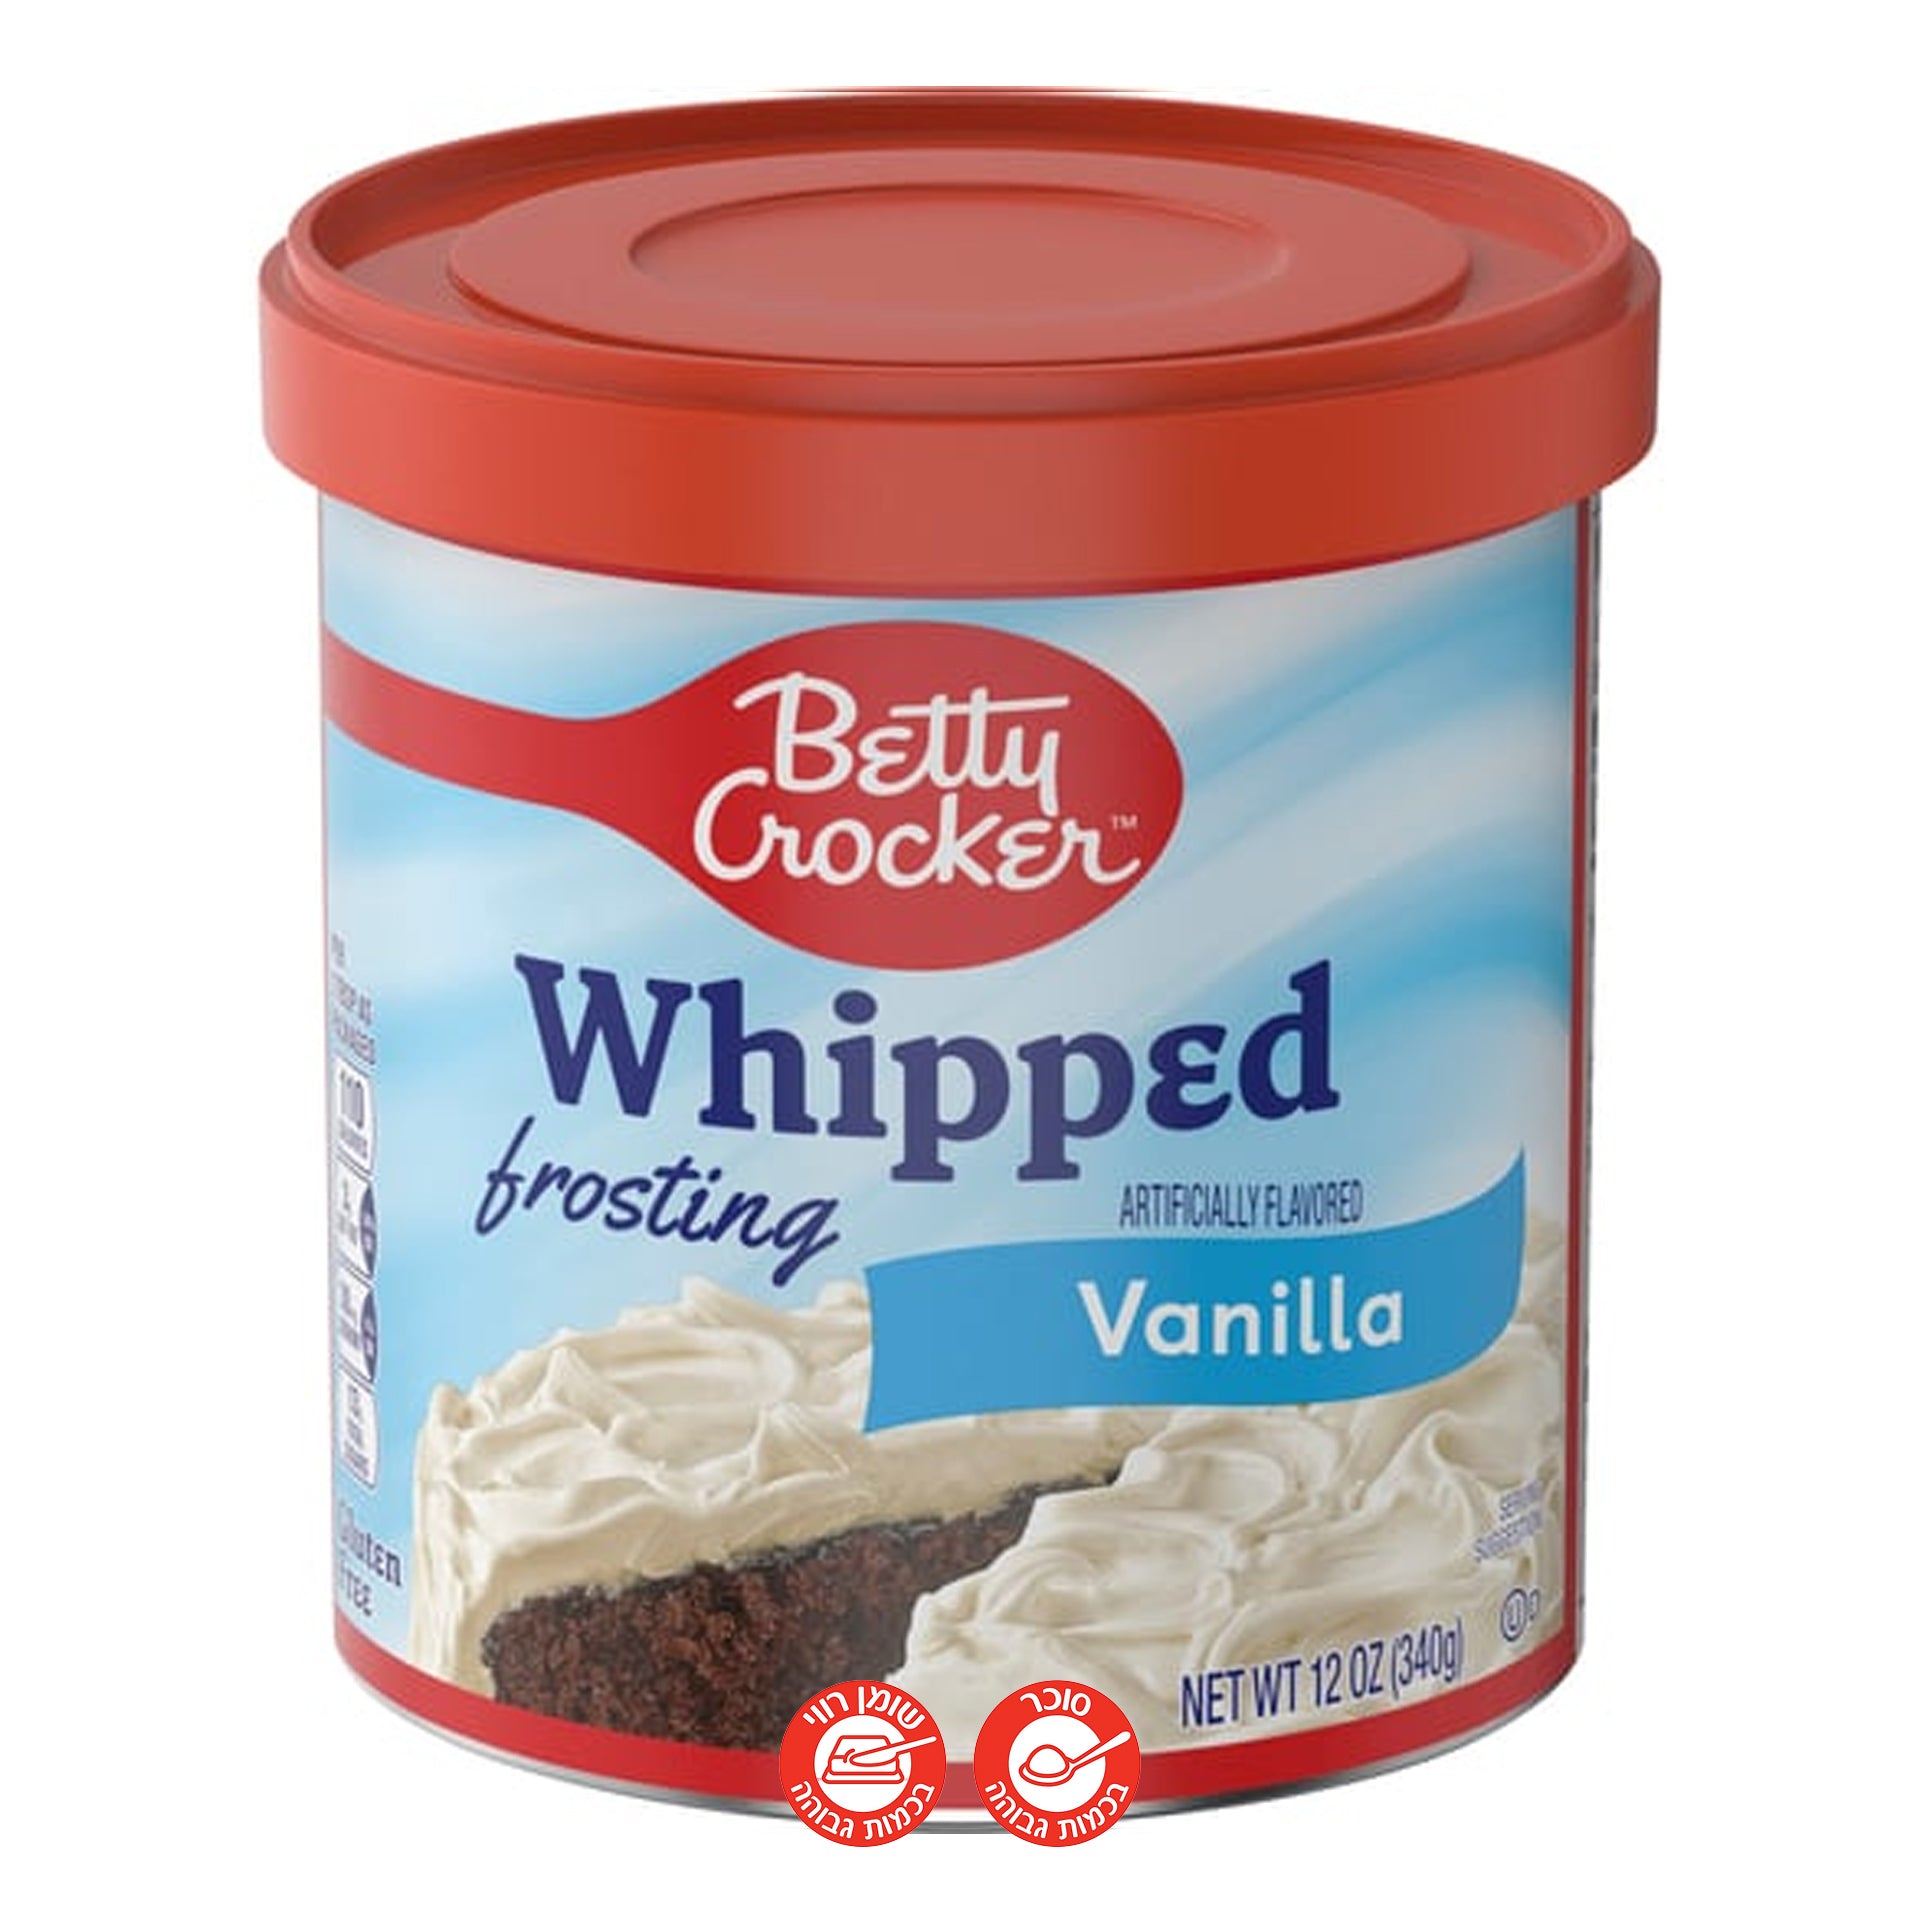 Betty Crocker Whipped frosting Vanilla ציפוי לעוגה בטי קרוקר בטעם וניל